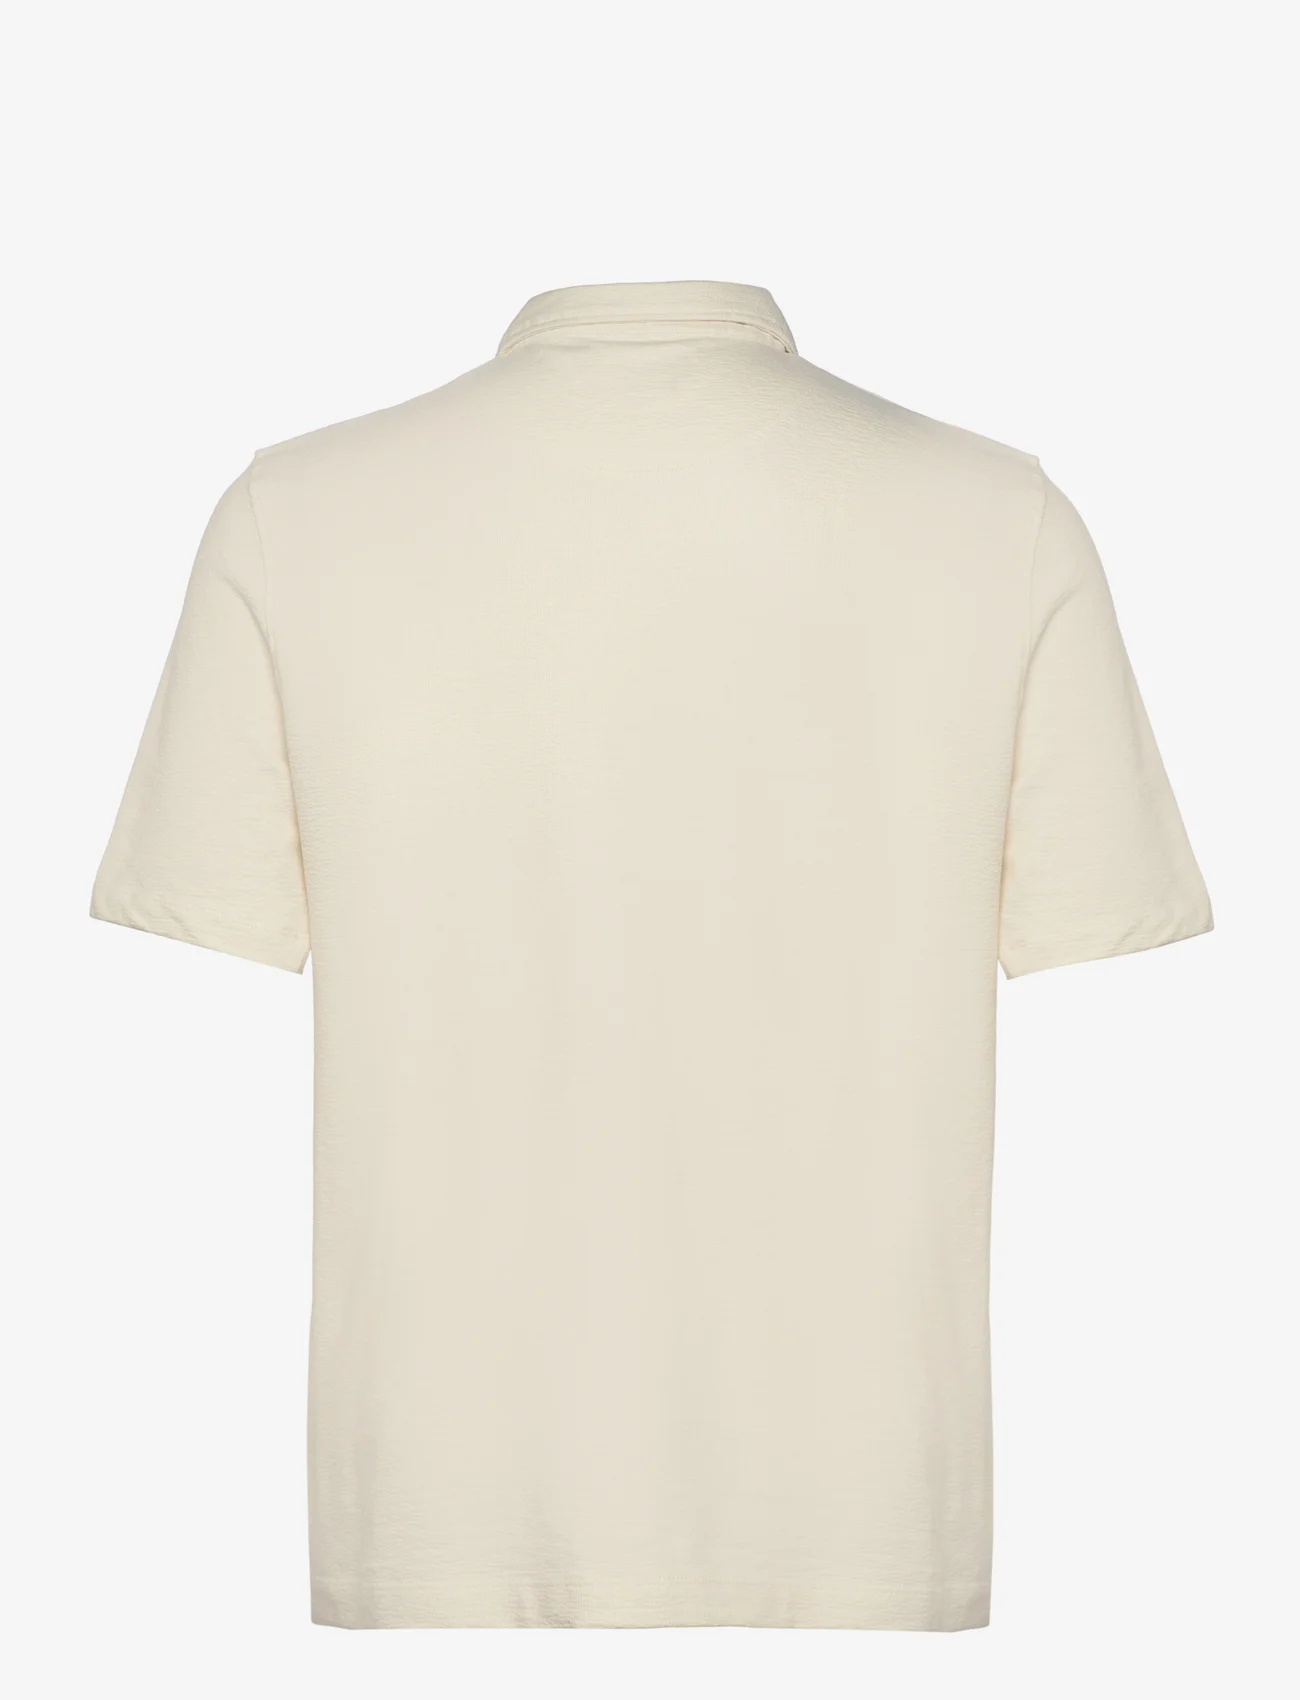 Clean Cut Copenhagen - Calton Structured Shirt S/S - kurzärmelig - ecru - 1